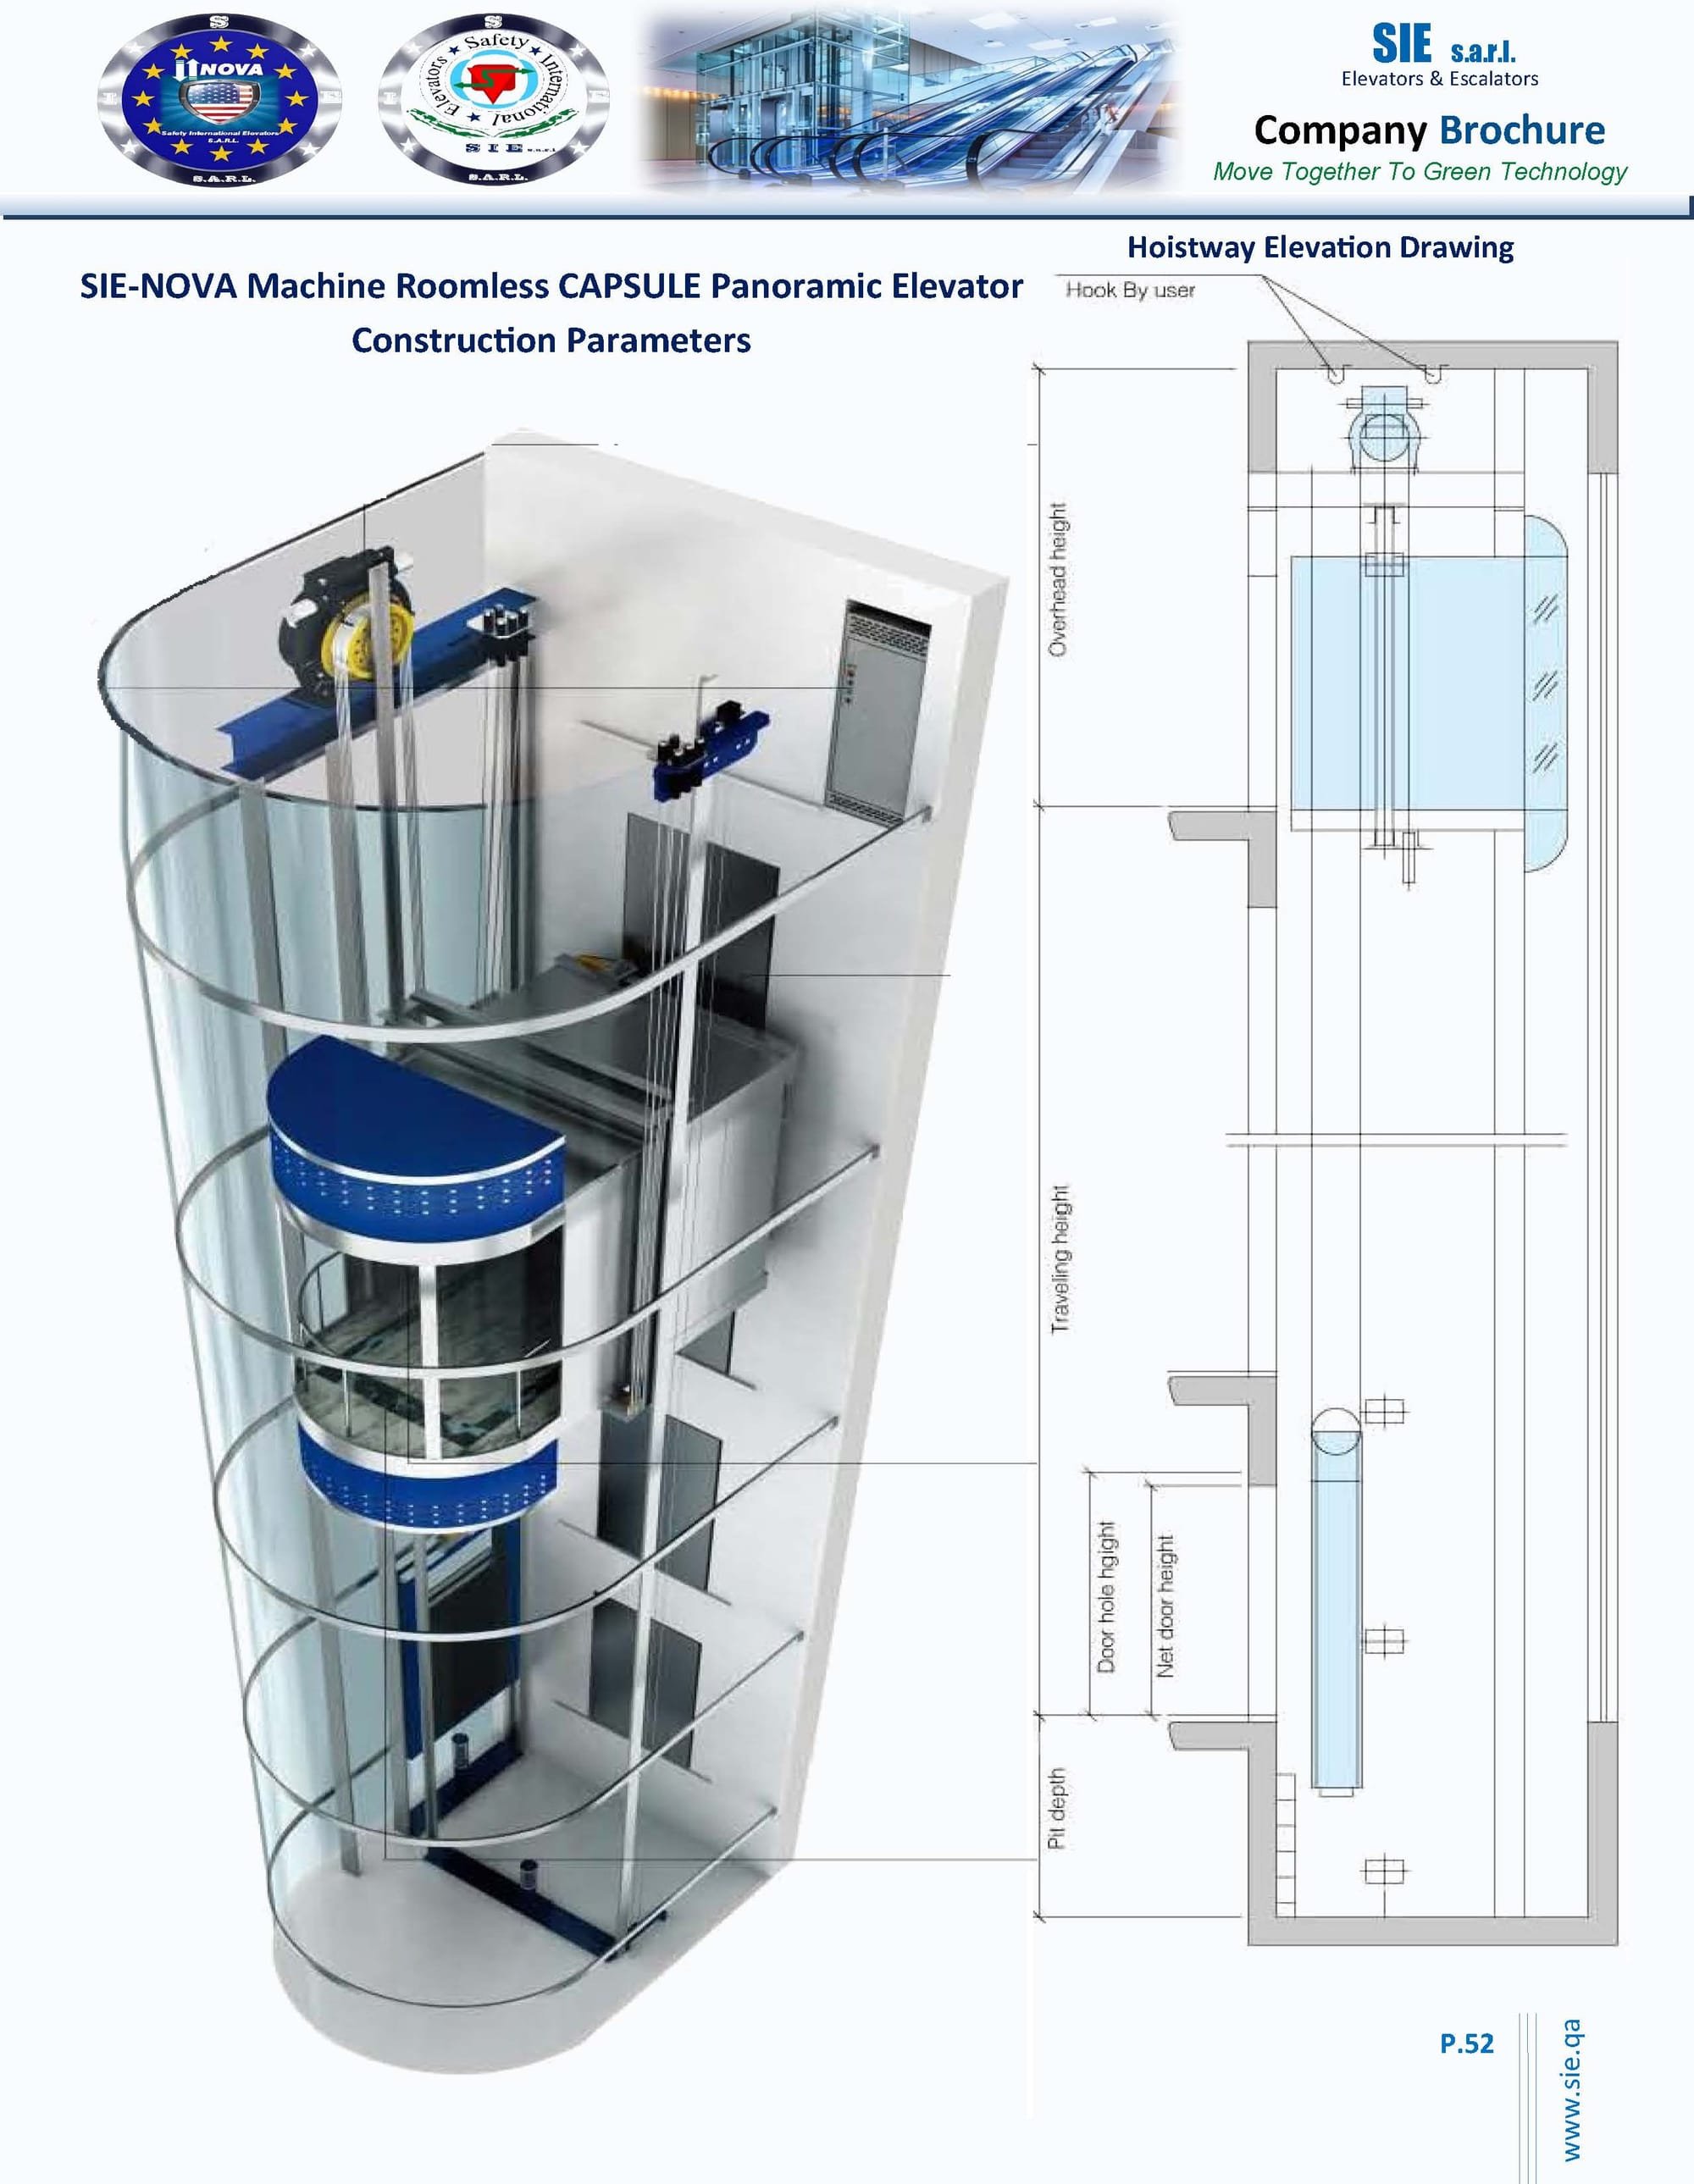 (MRL) MACHINE ROOMLESS CAPSULE PANORAMIC ELEVATORS - DETAILS & DIMENSIONS